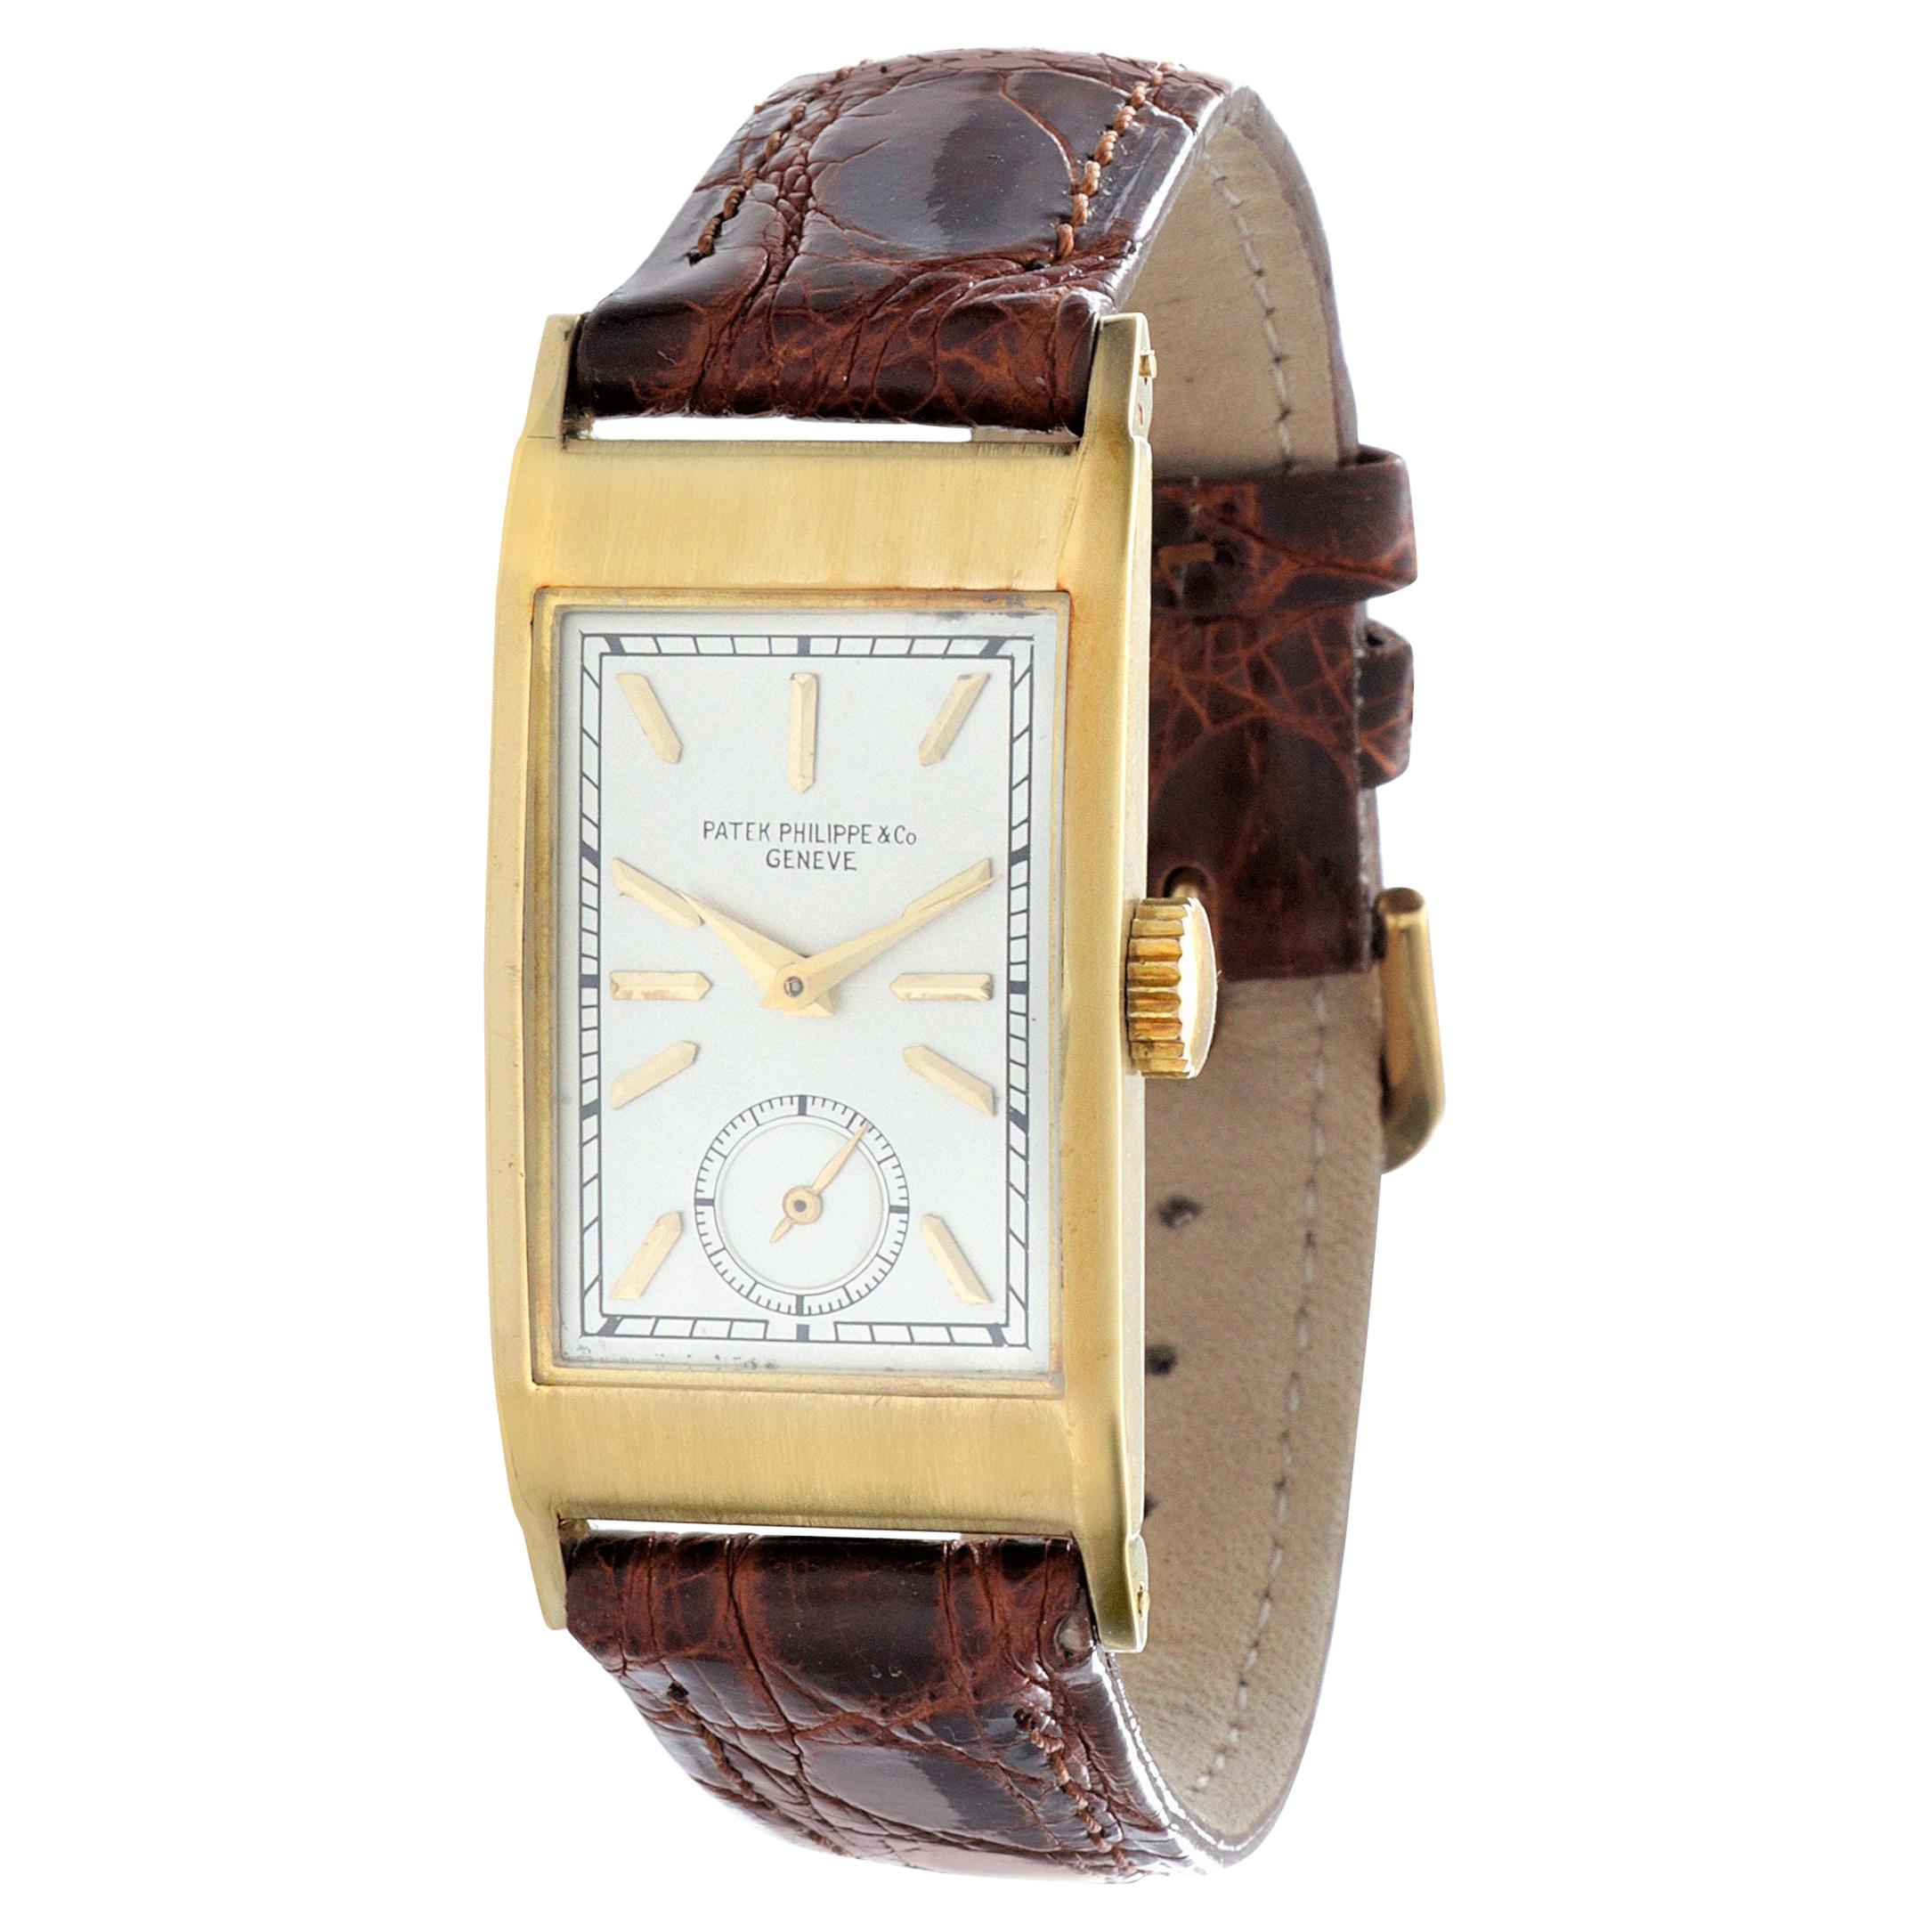 Patek Philippe 425J "Tegolino" Vintage Art Deco Watch in Yellow Gold, Circa 1940 For Sale